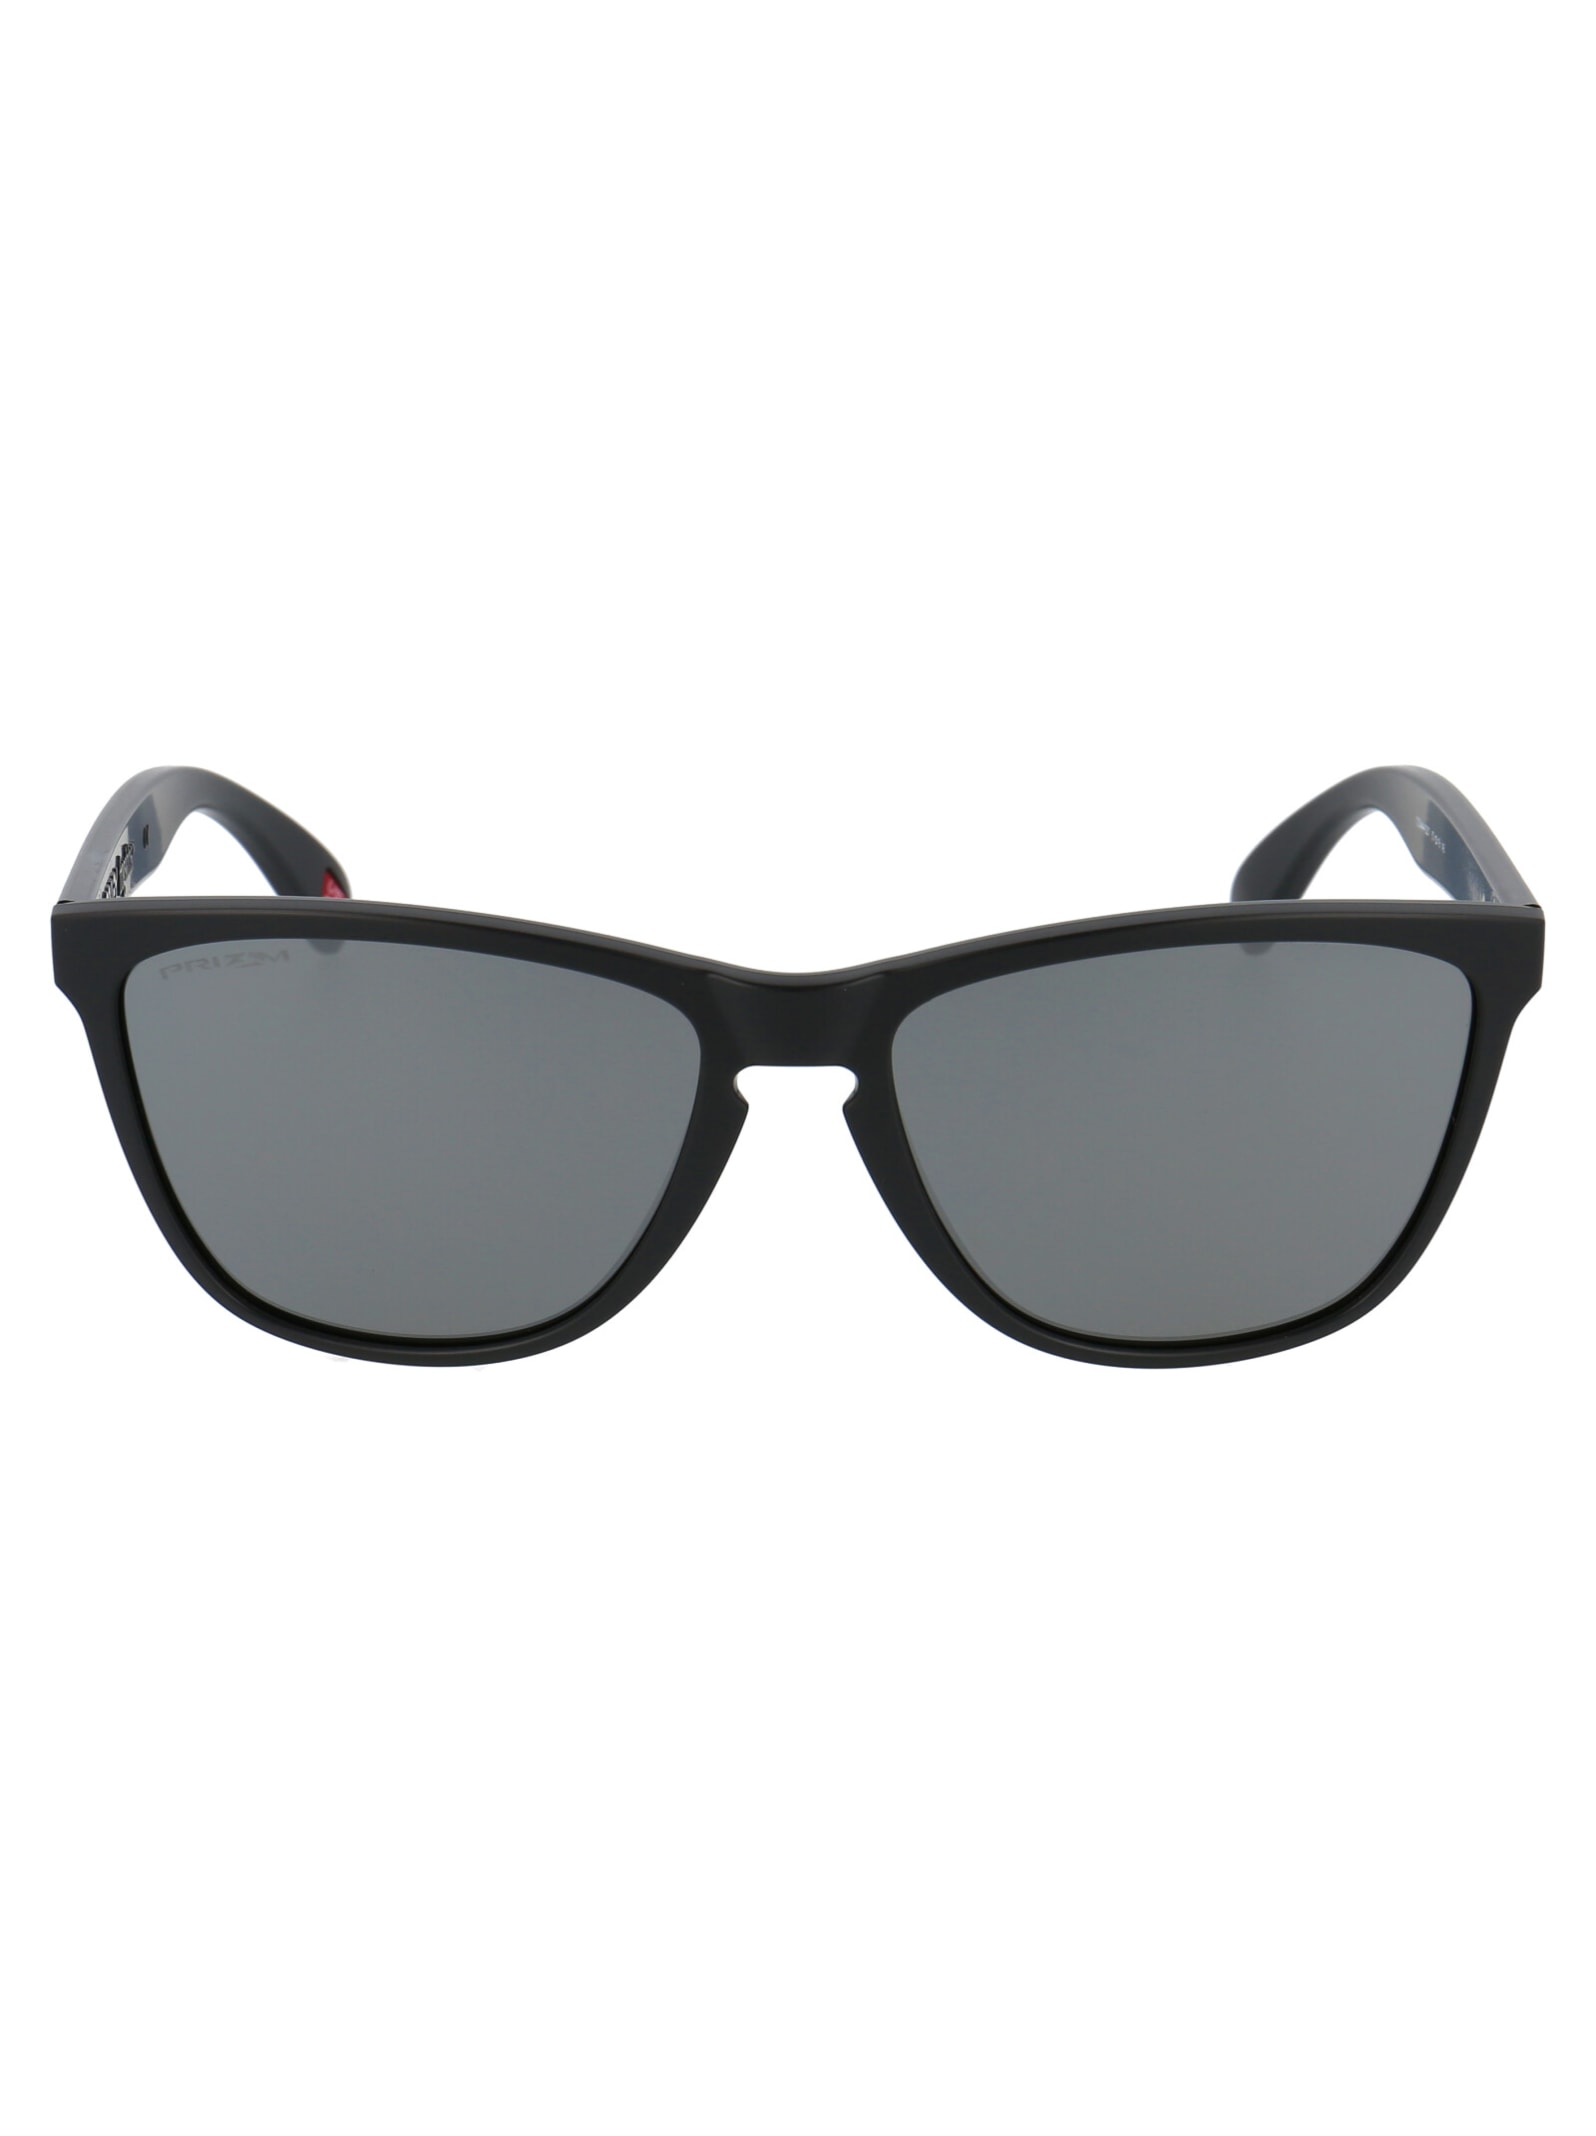 Oakley Frogskins 35th Sunglasses